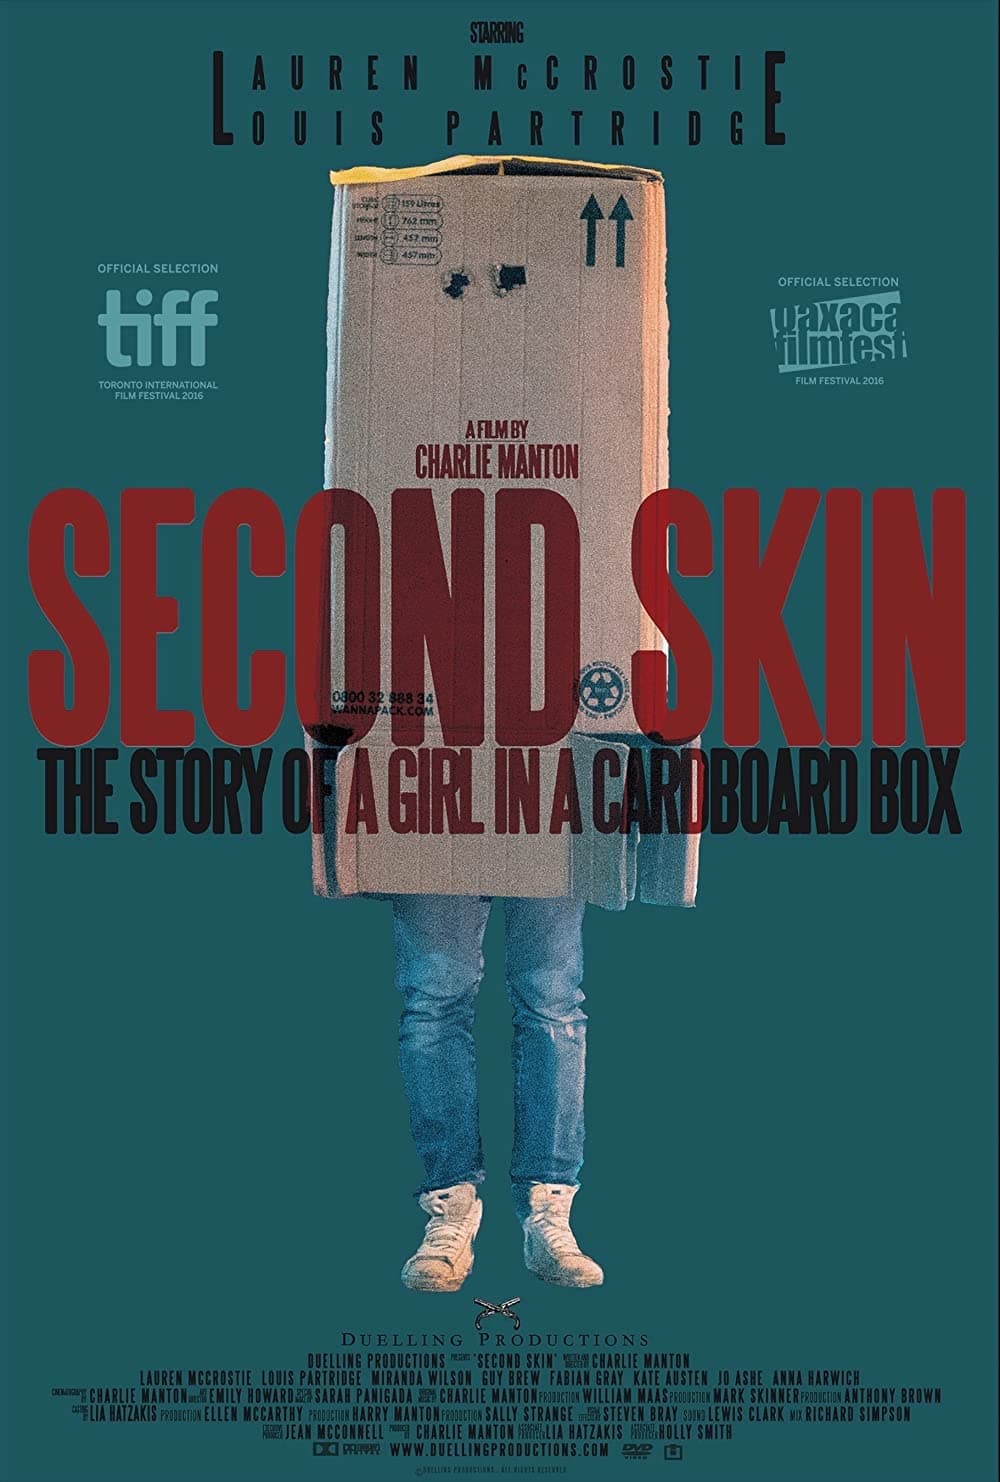 Second Skin